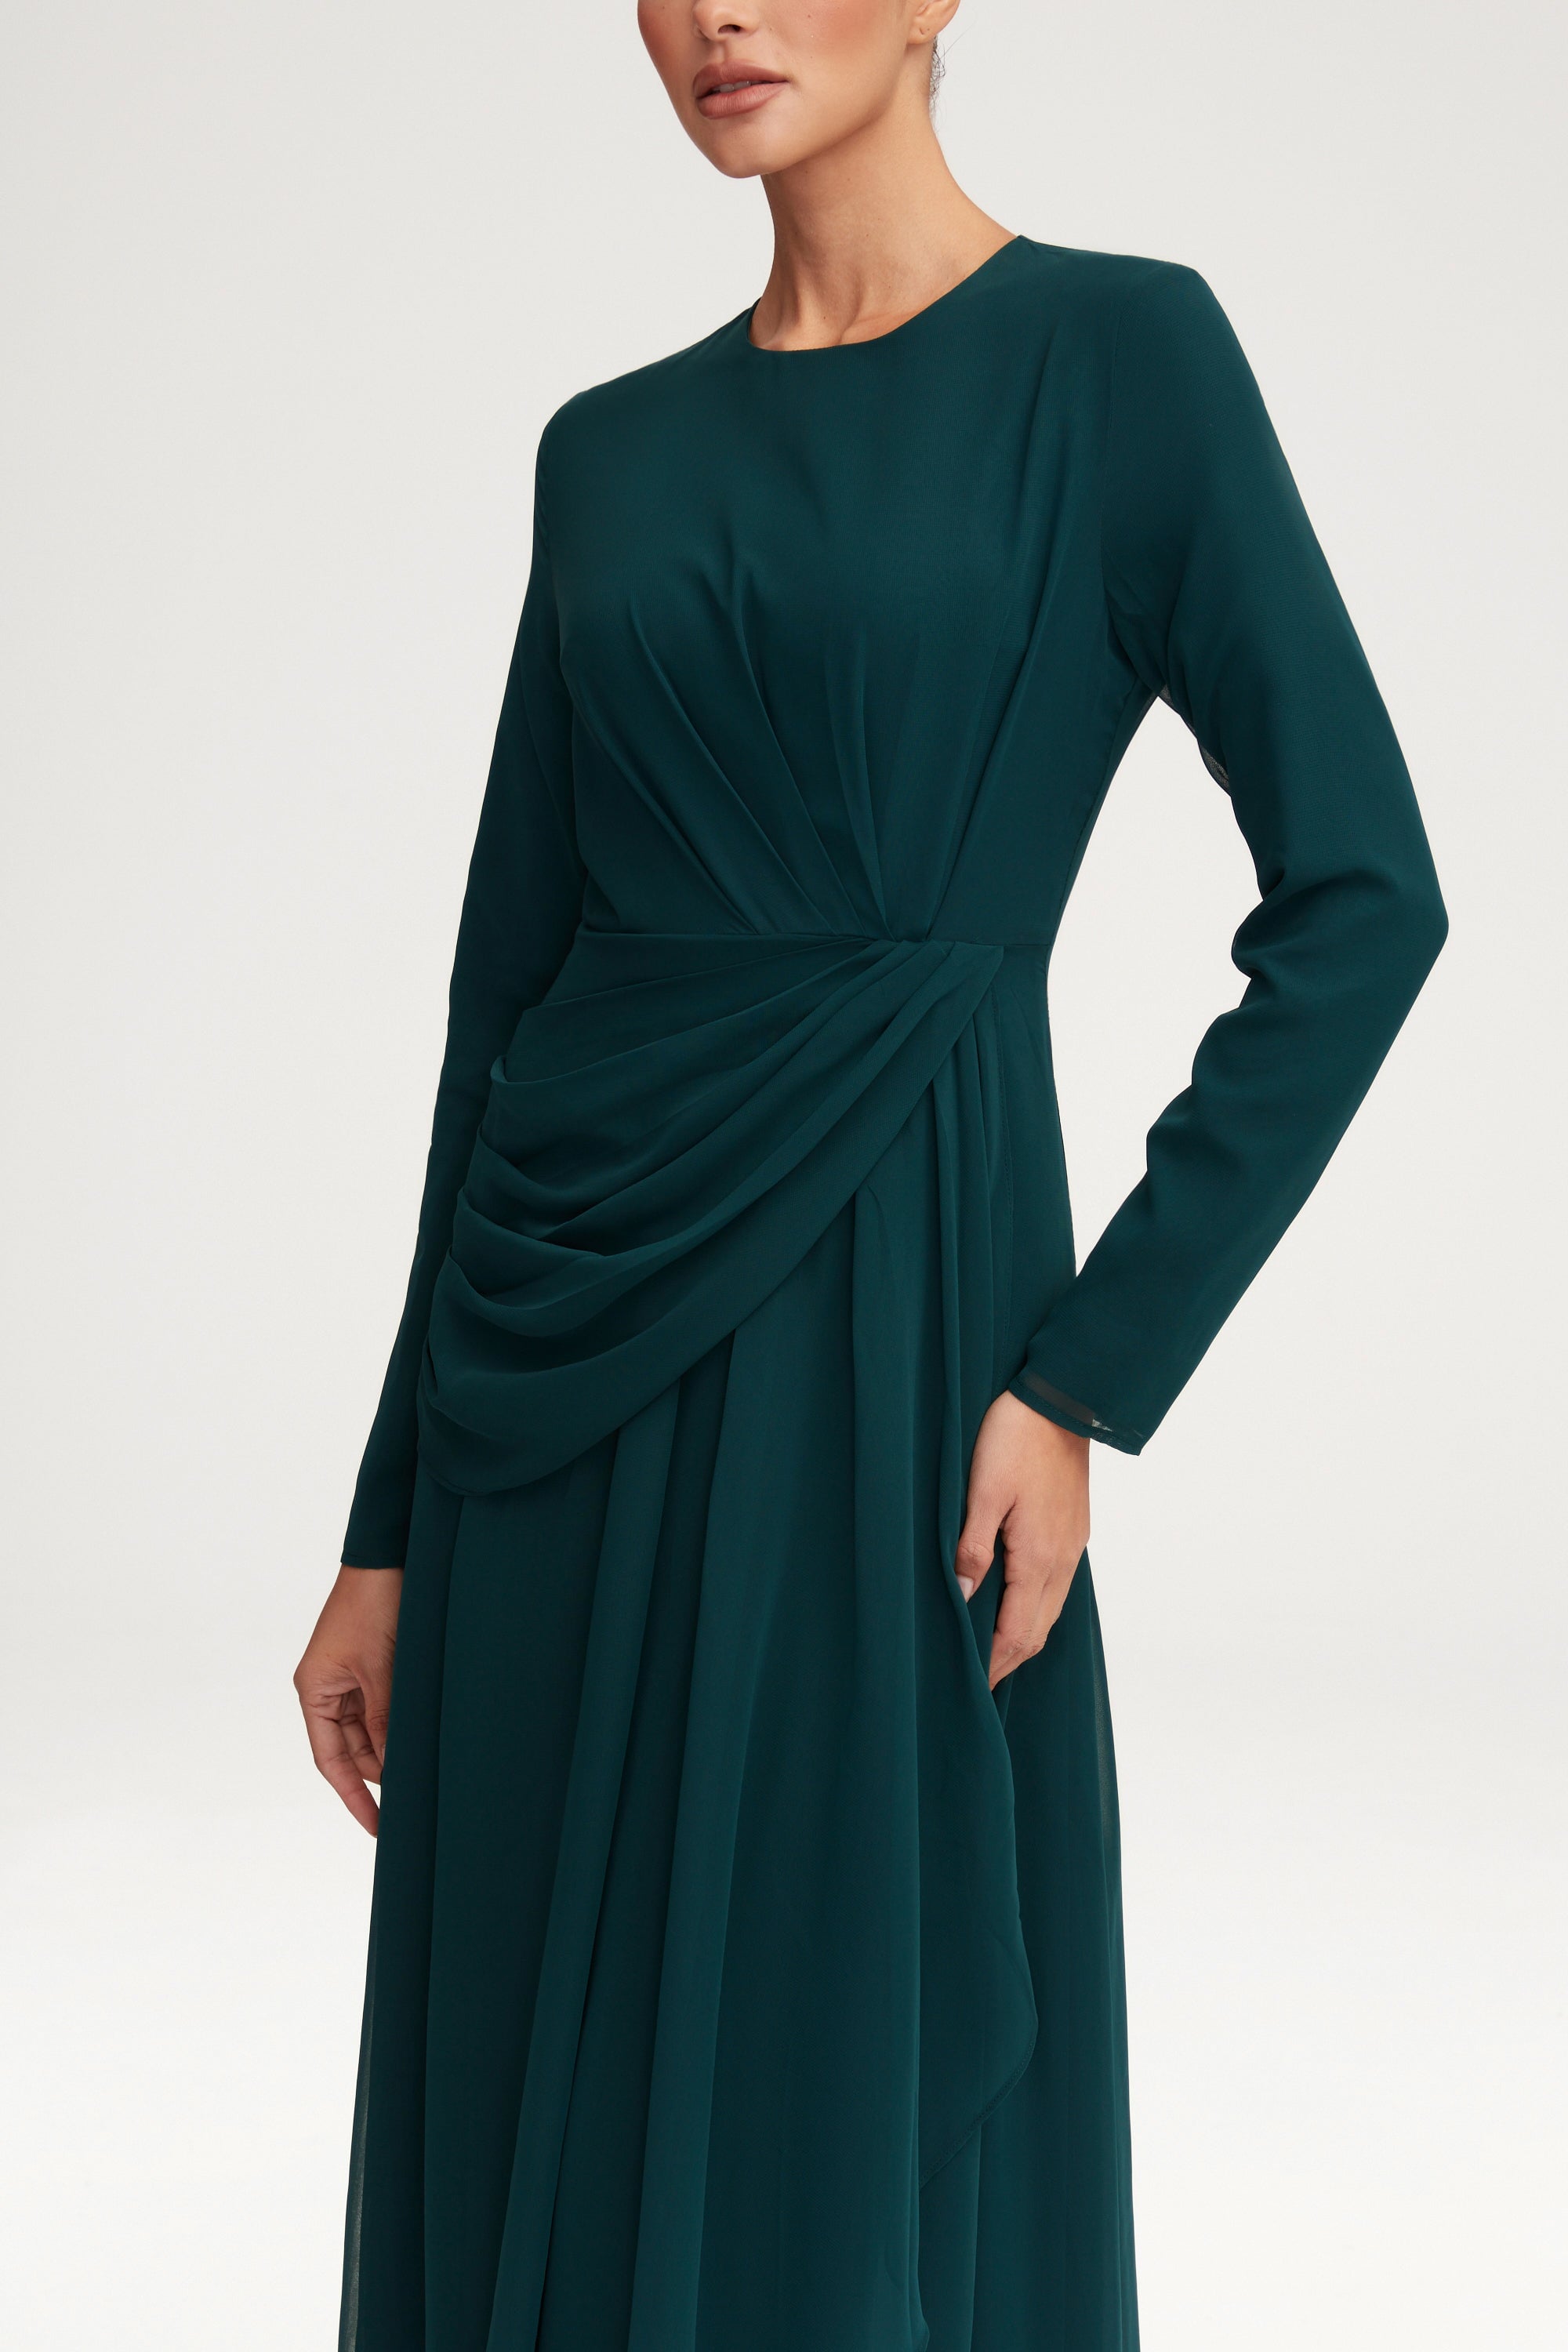 Huda Chiffon Maxi Dress - Teal Clothing Veiled 